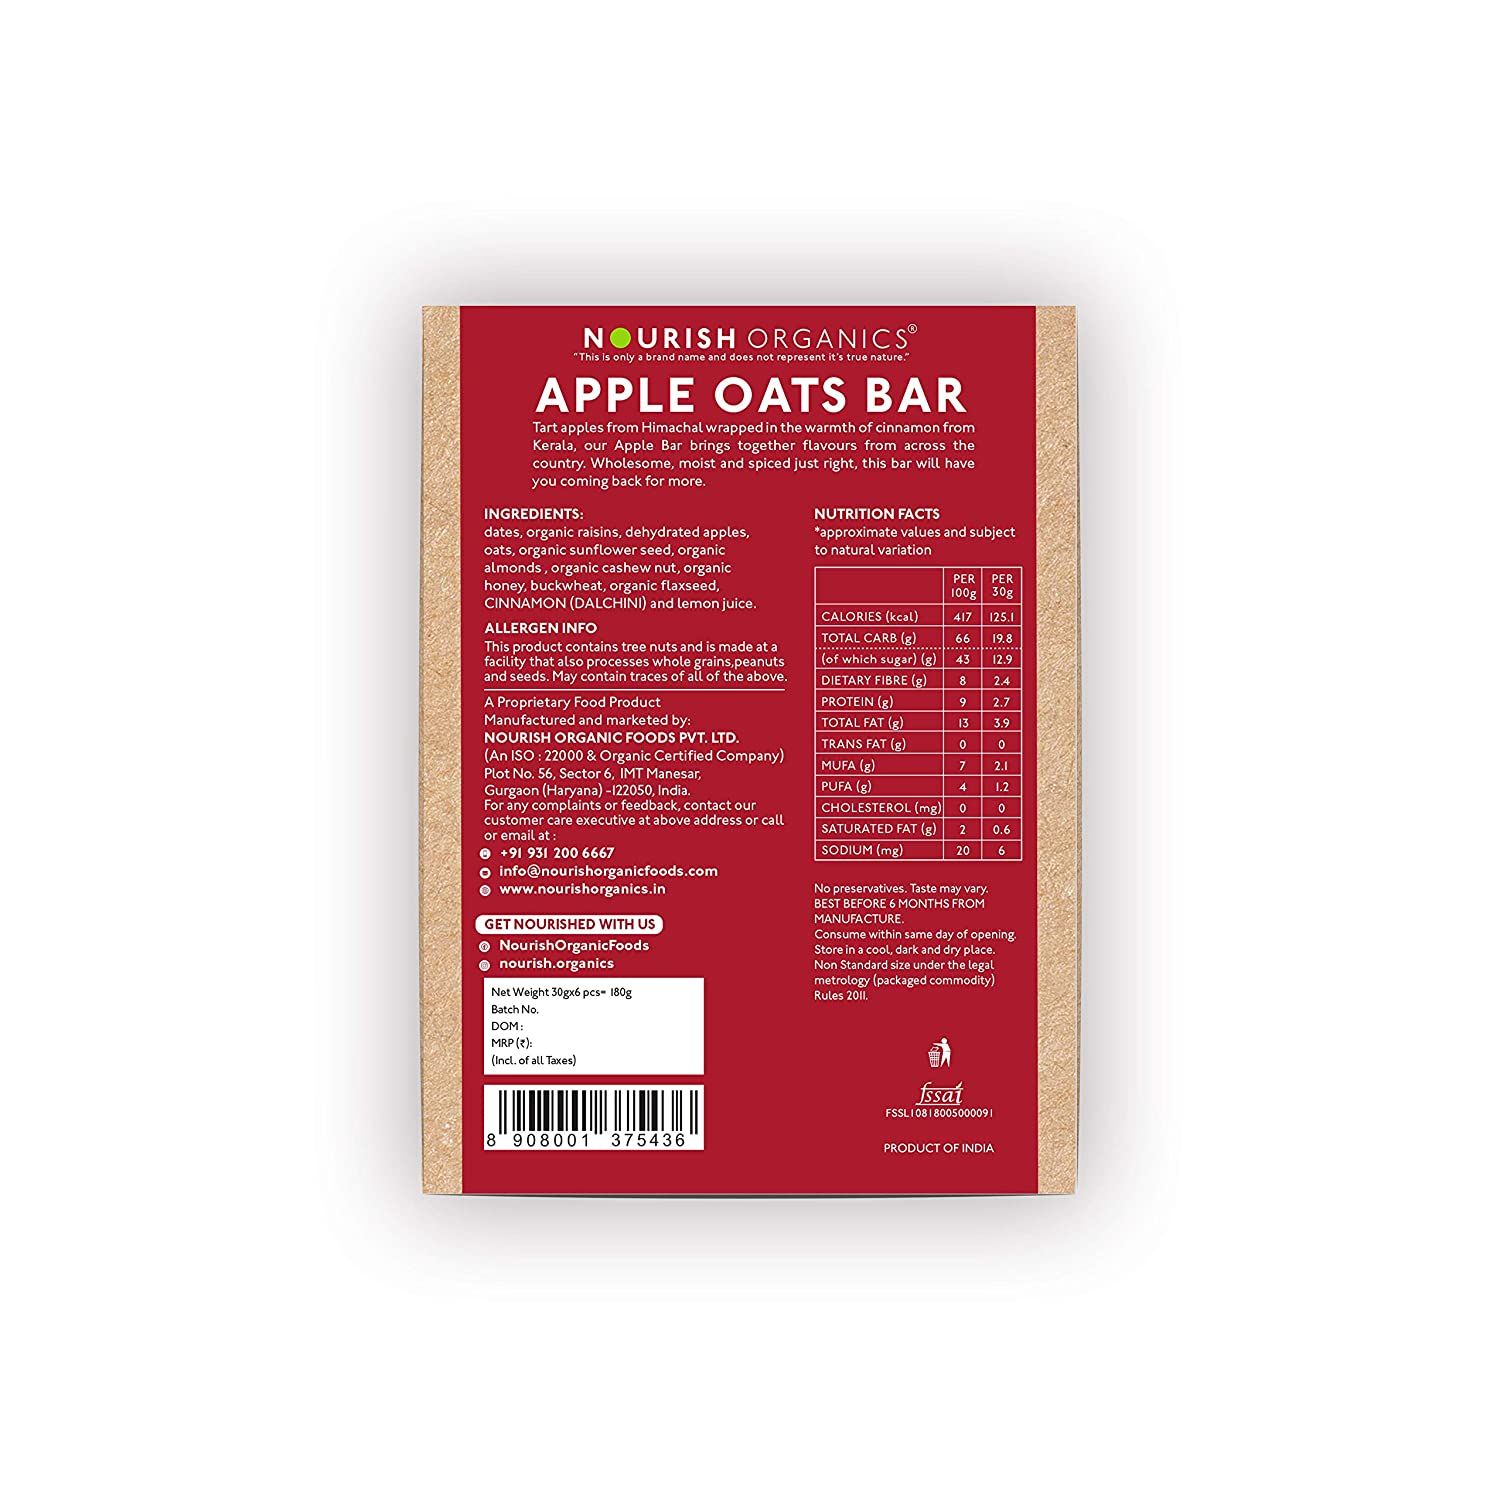 Nourish Organics Apple Oats Bar Image